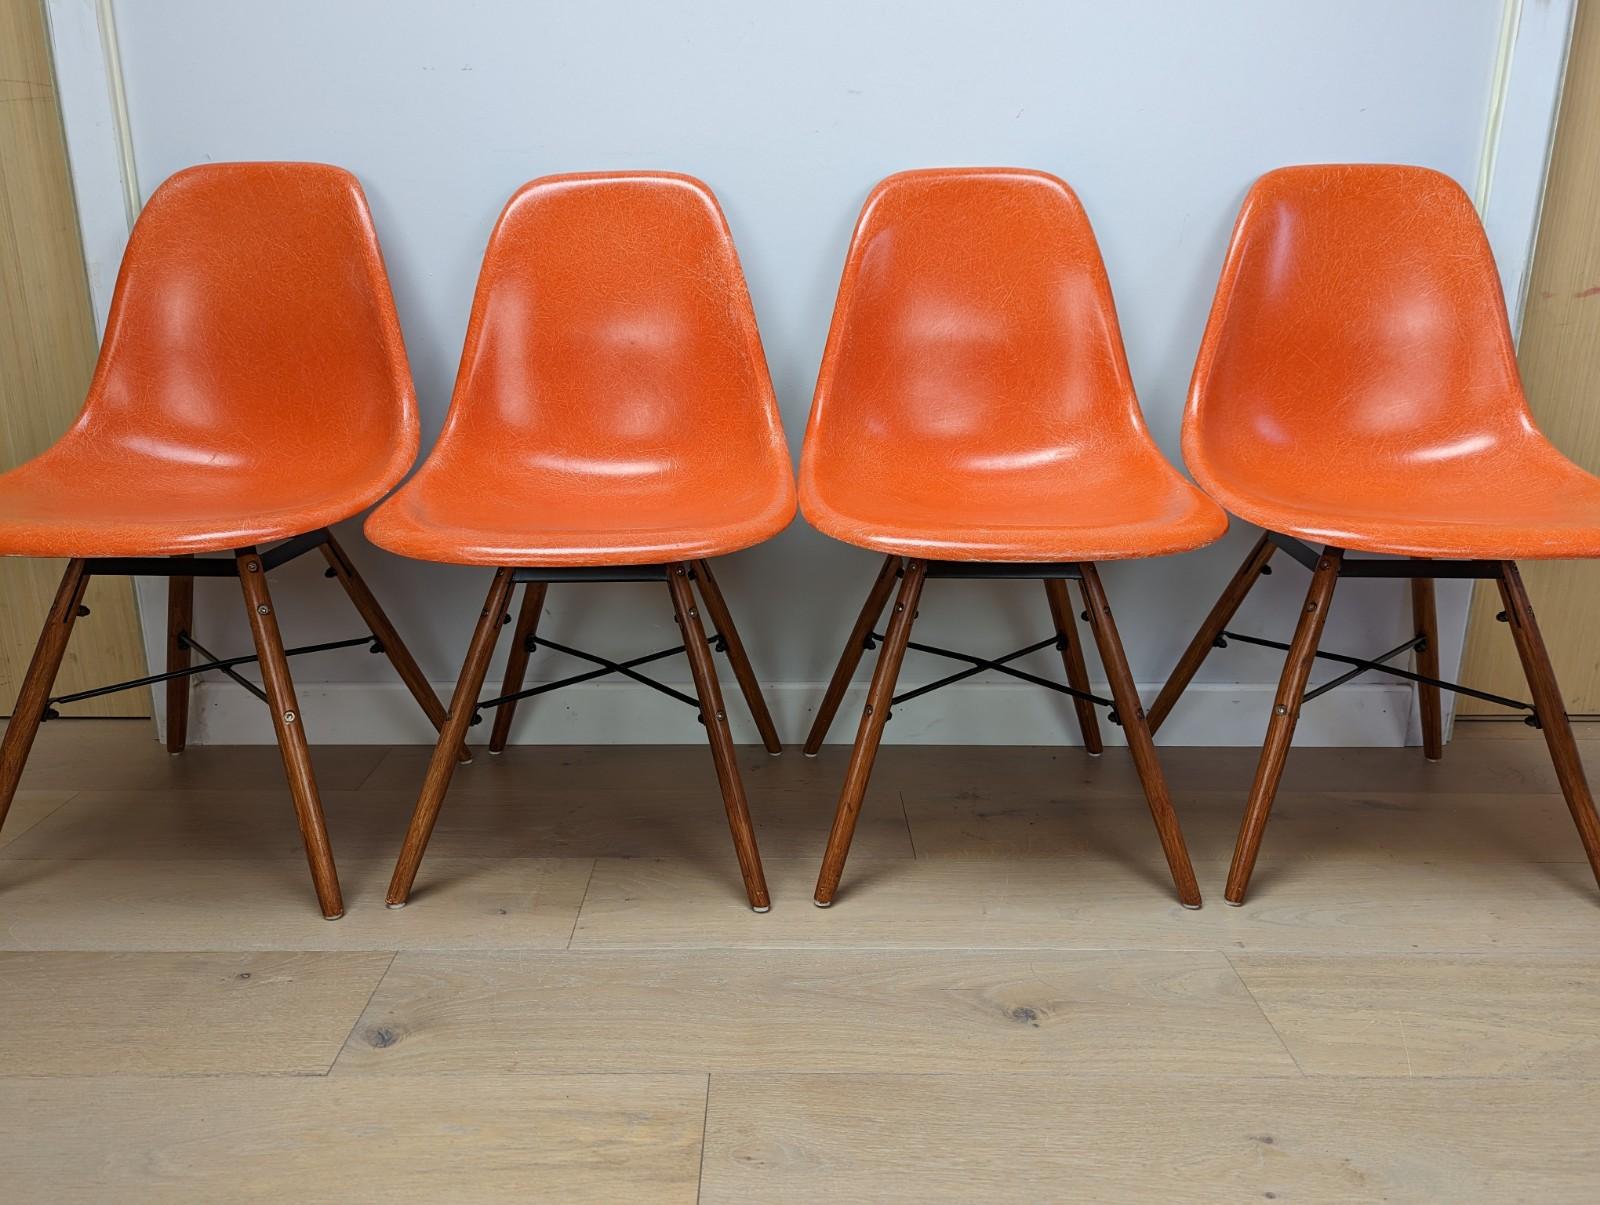 American Set of 4 Herman Miller Fiberglass Eames DSW Chairs - Orange